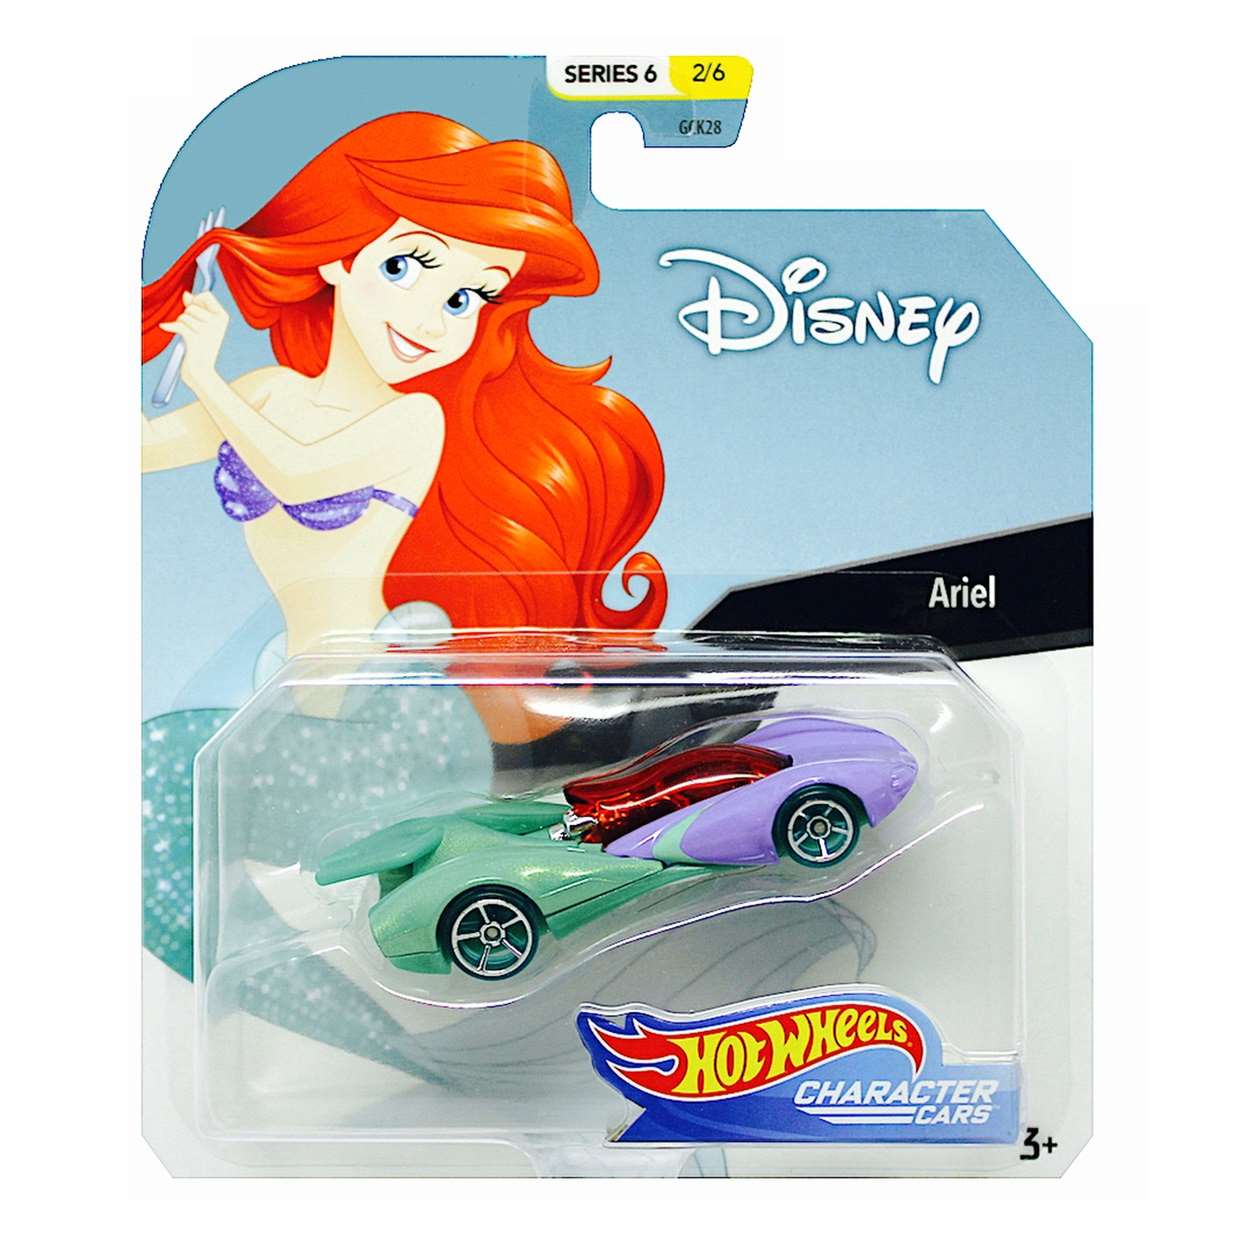 Ariel 1/64 Hot Wheels Disney La Sirenita Character Cars 